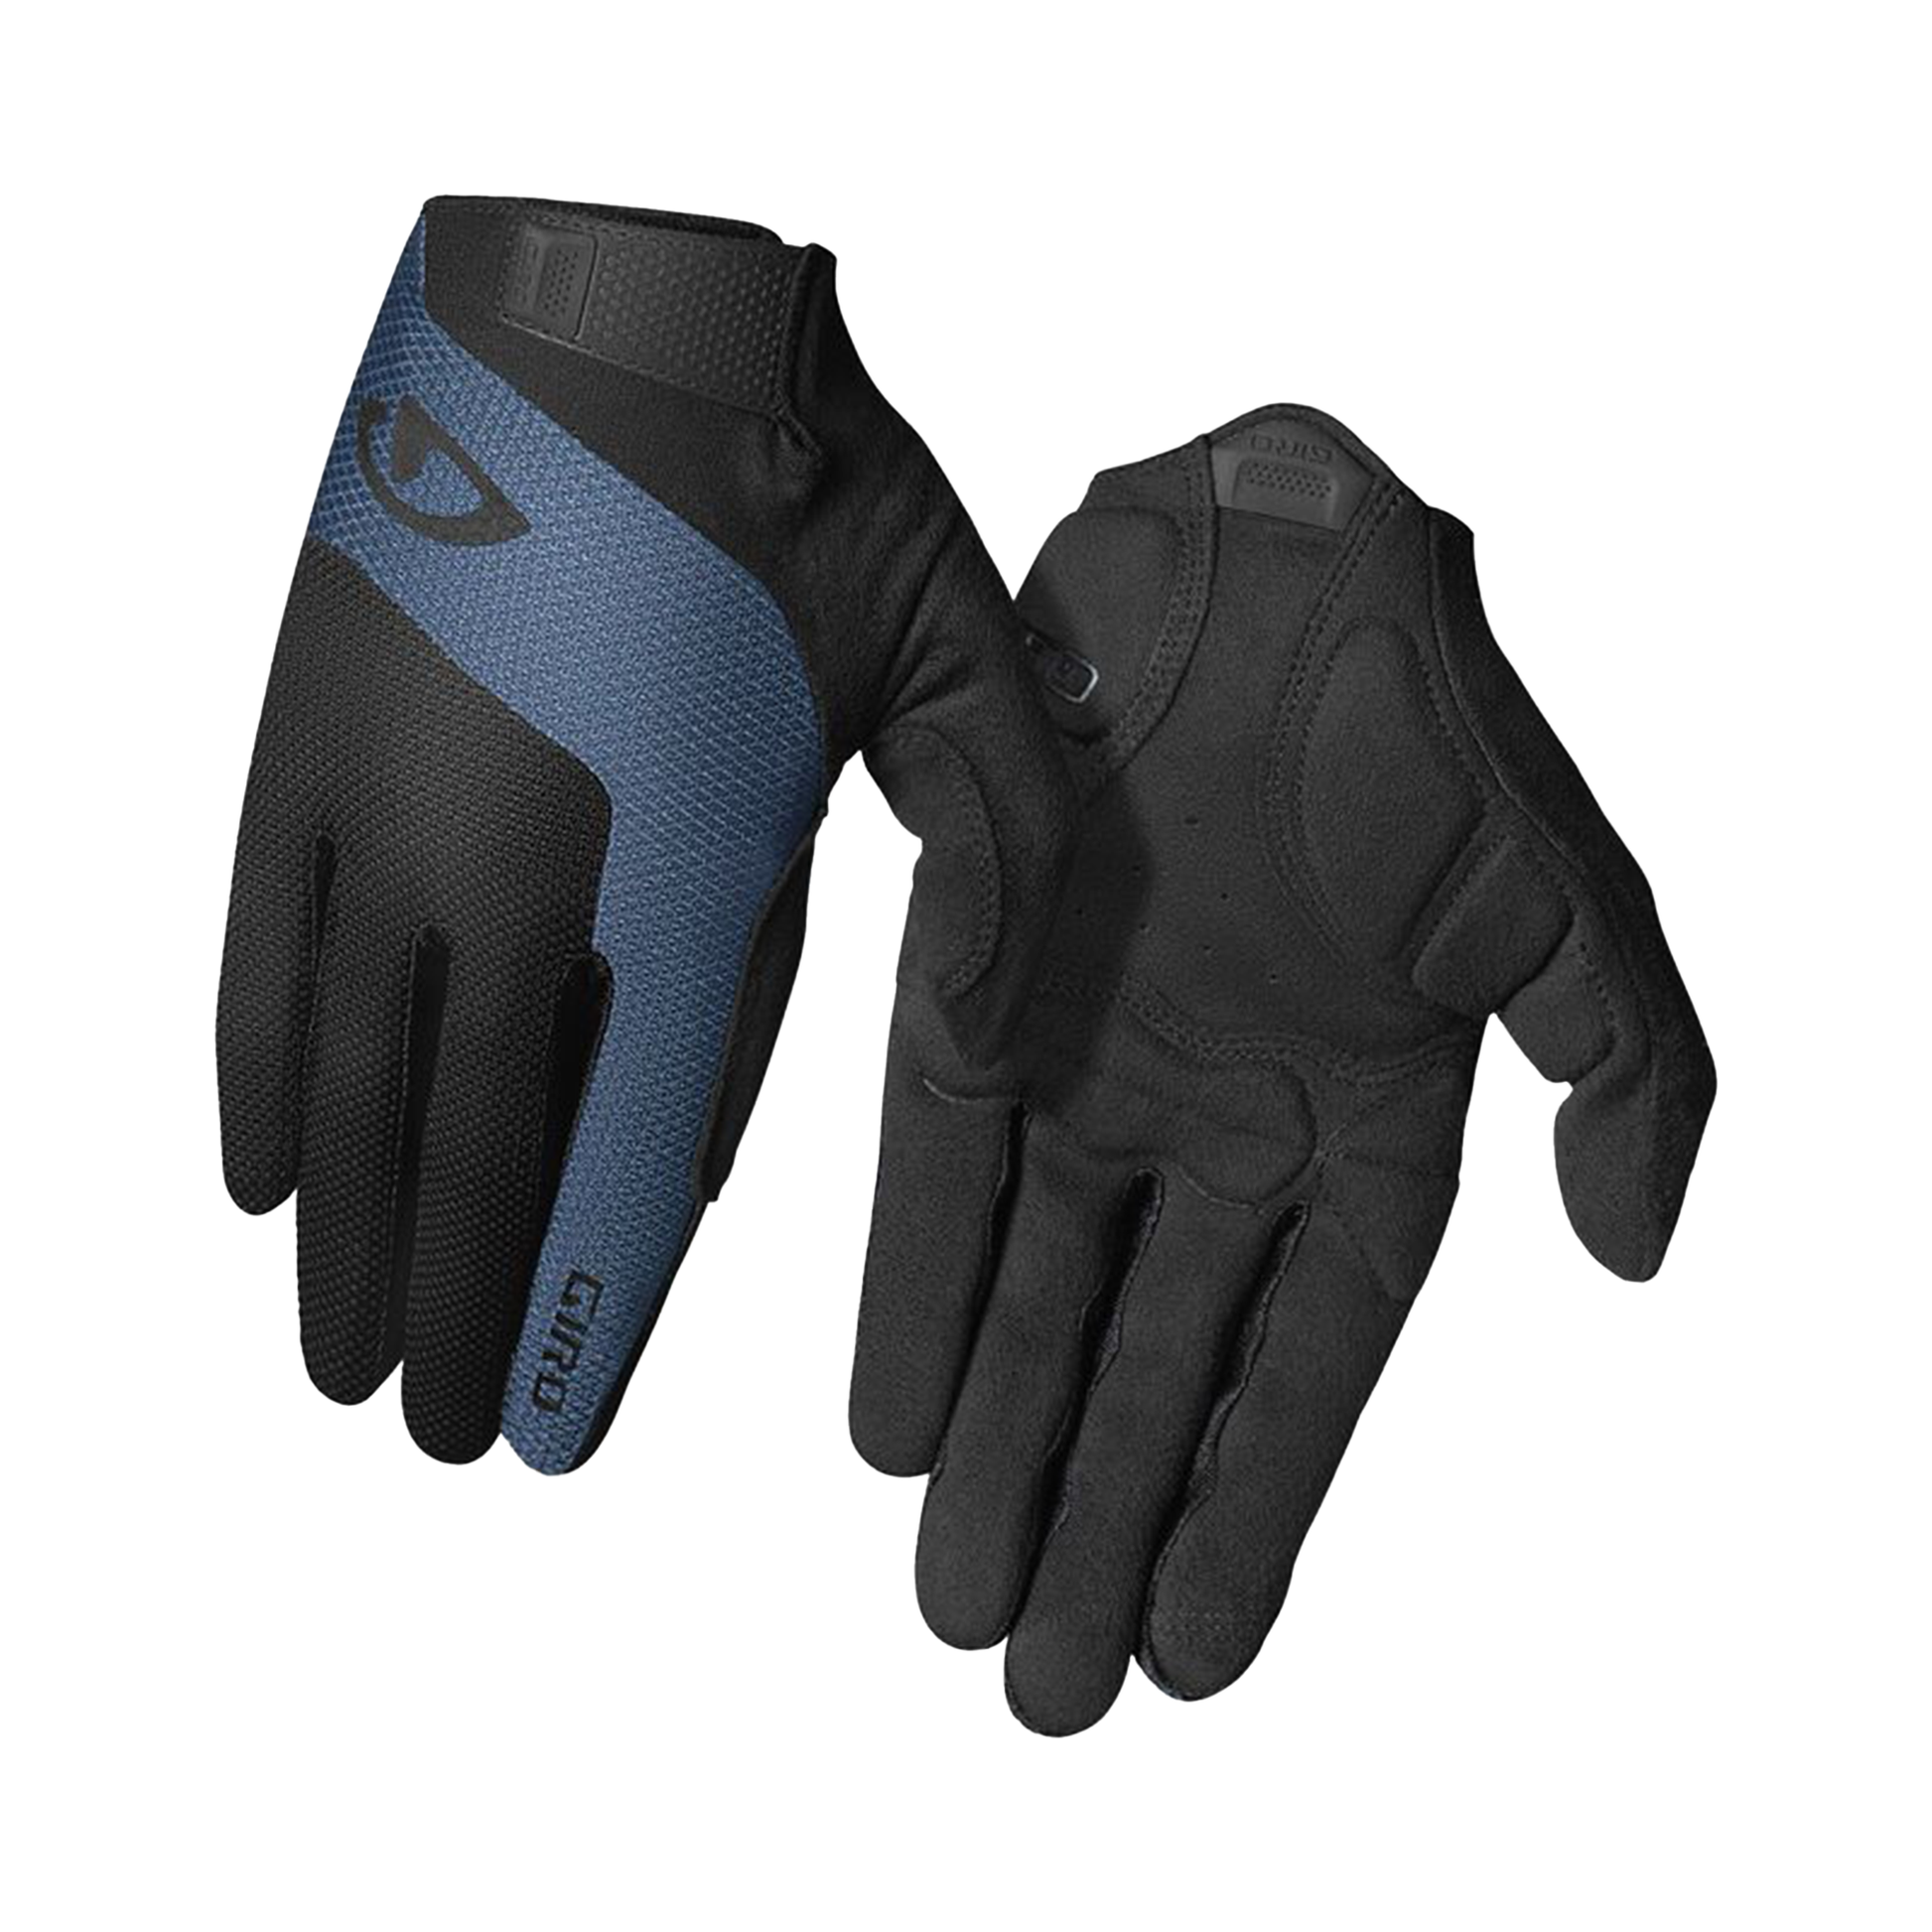 Giro Women's Tessa Gel LF Glove Black/Harbor Blue Bike Gloves